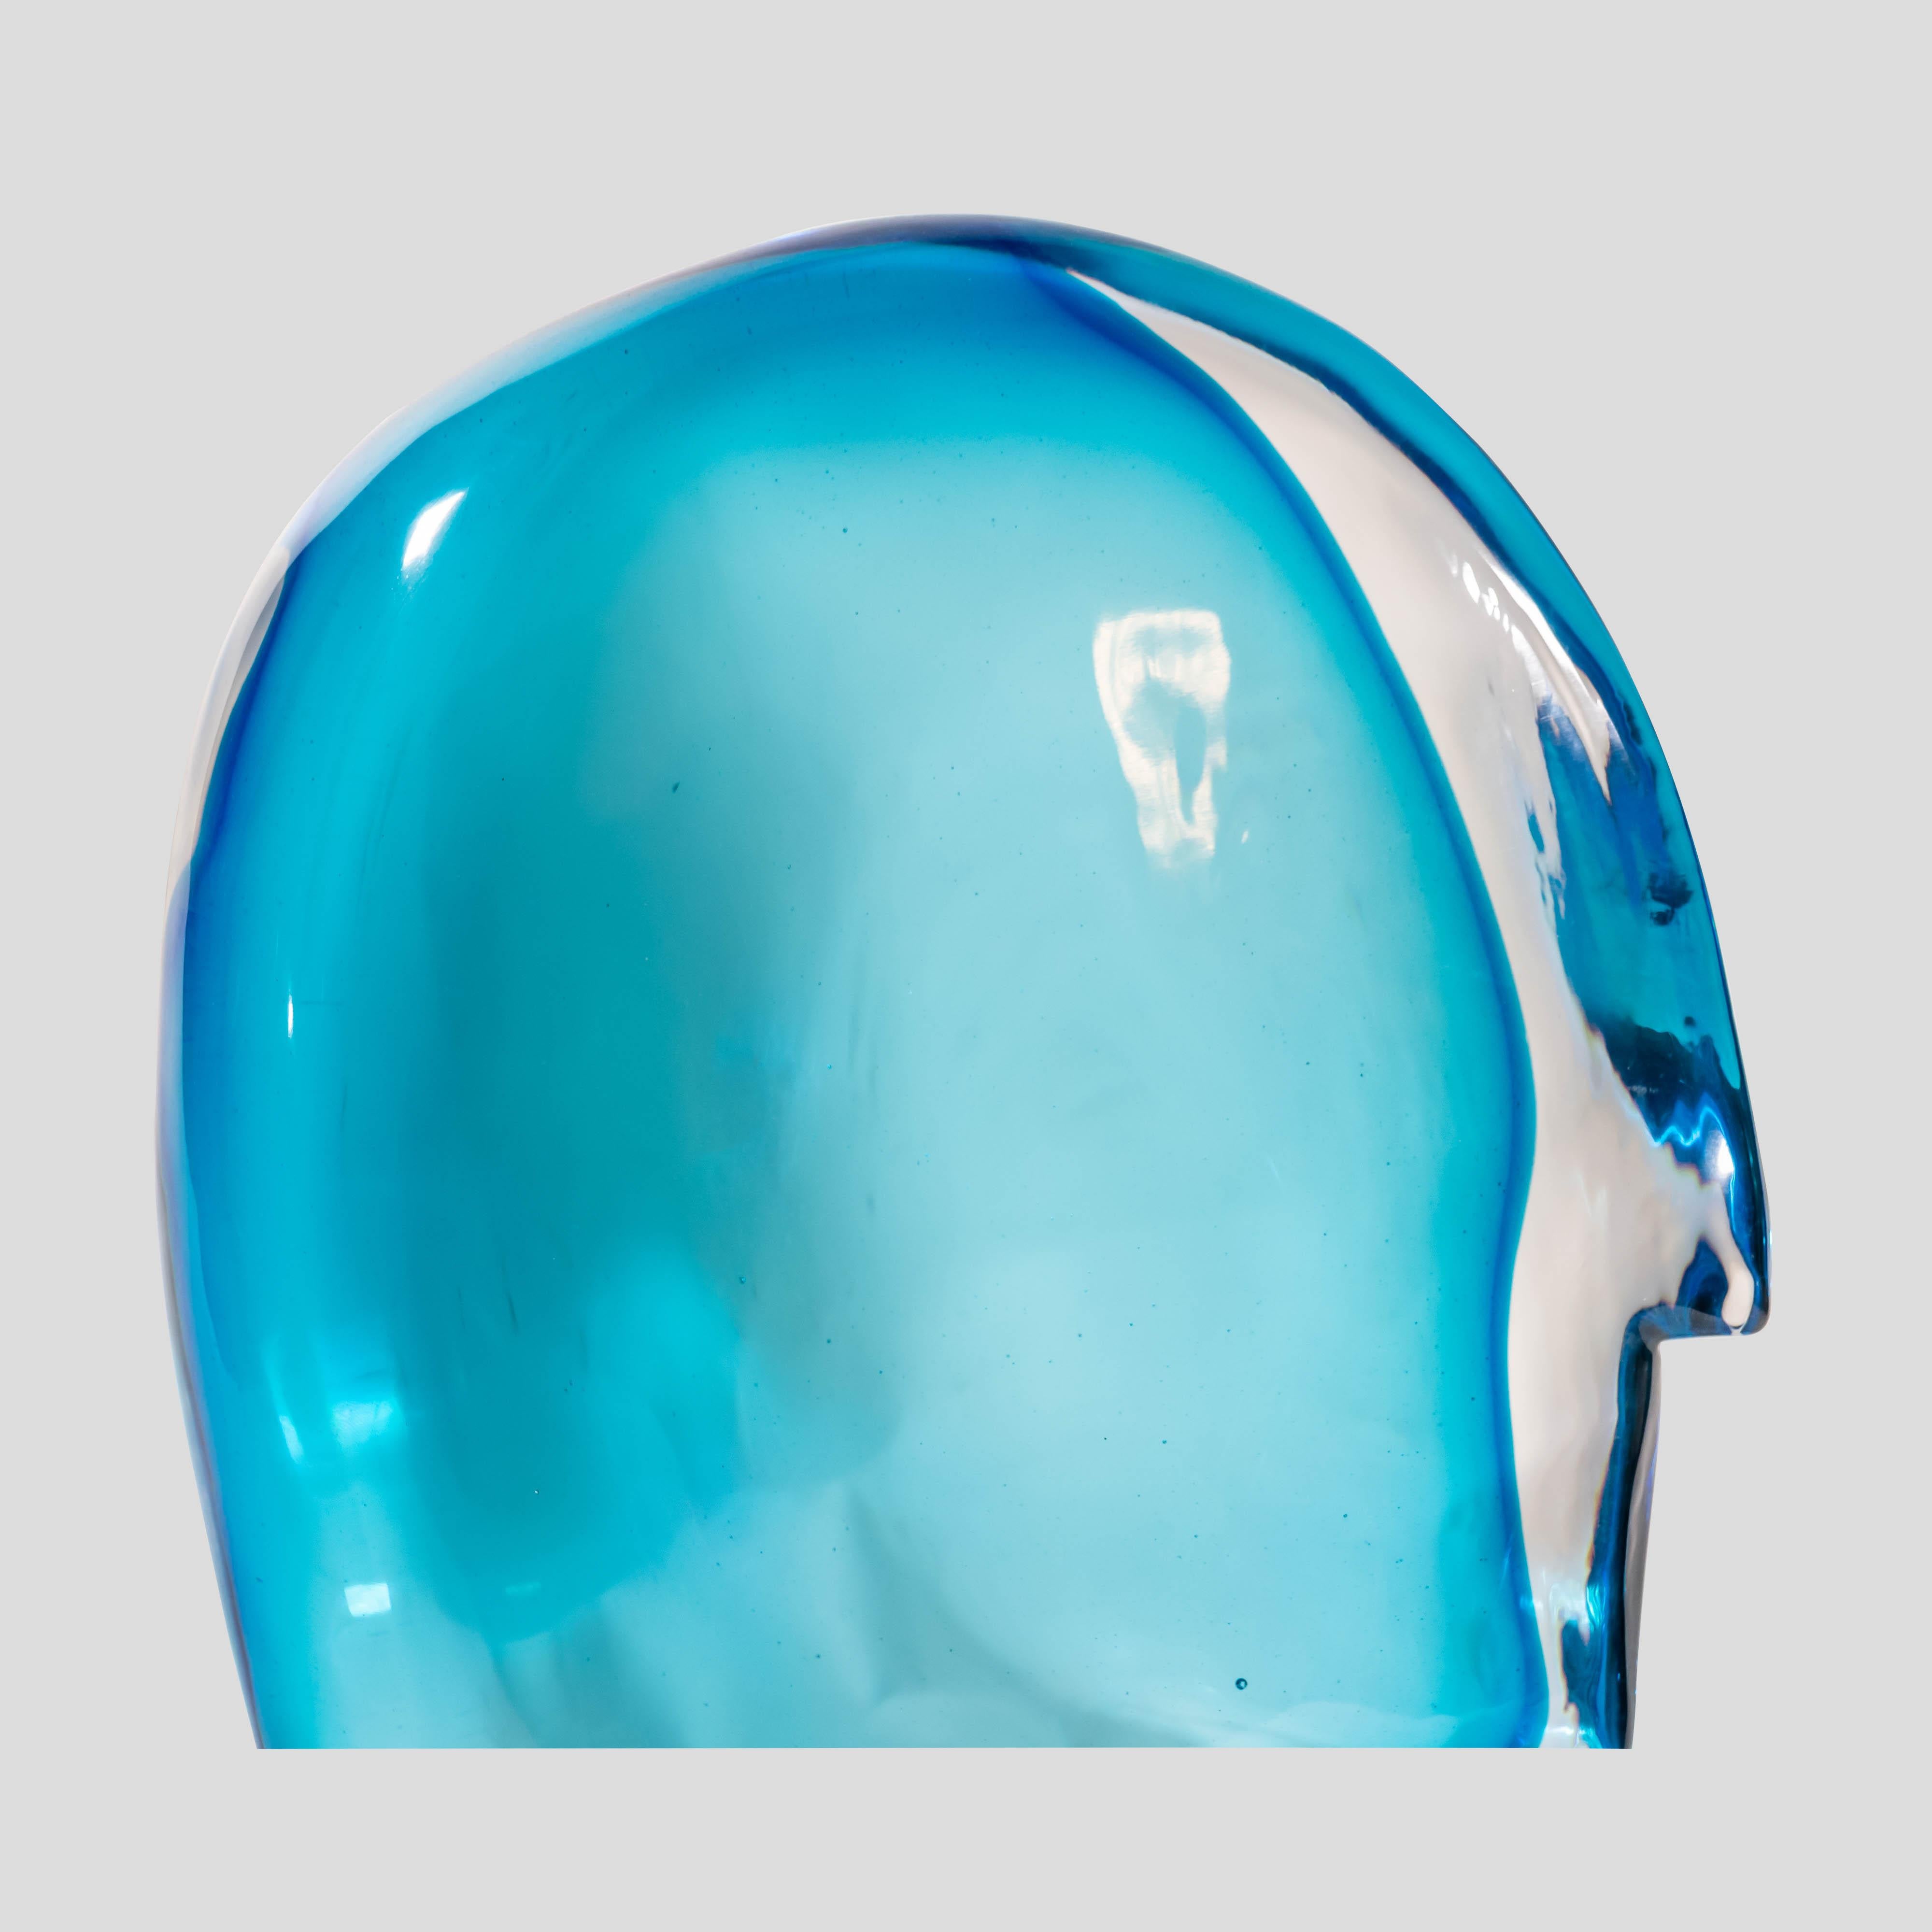 Contemporary 1989 Ego Art Glass Sculpture Light Blue Murano Glass by Artist Ursula Huber For Sale